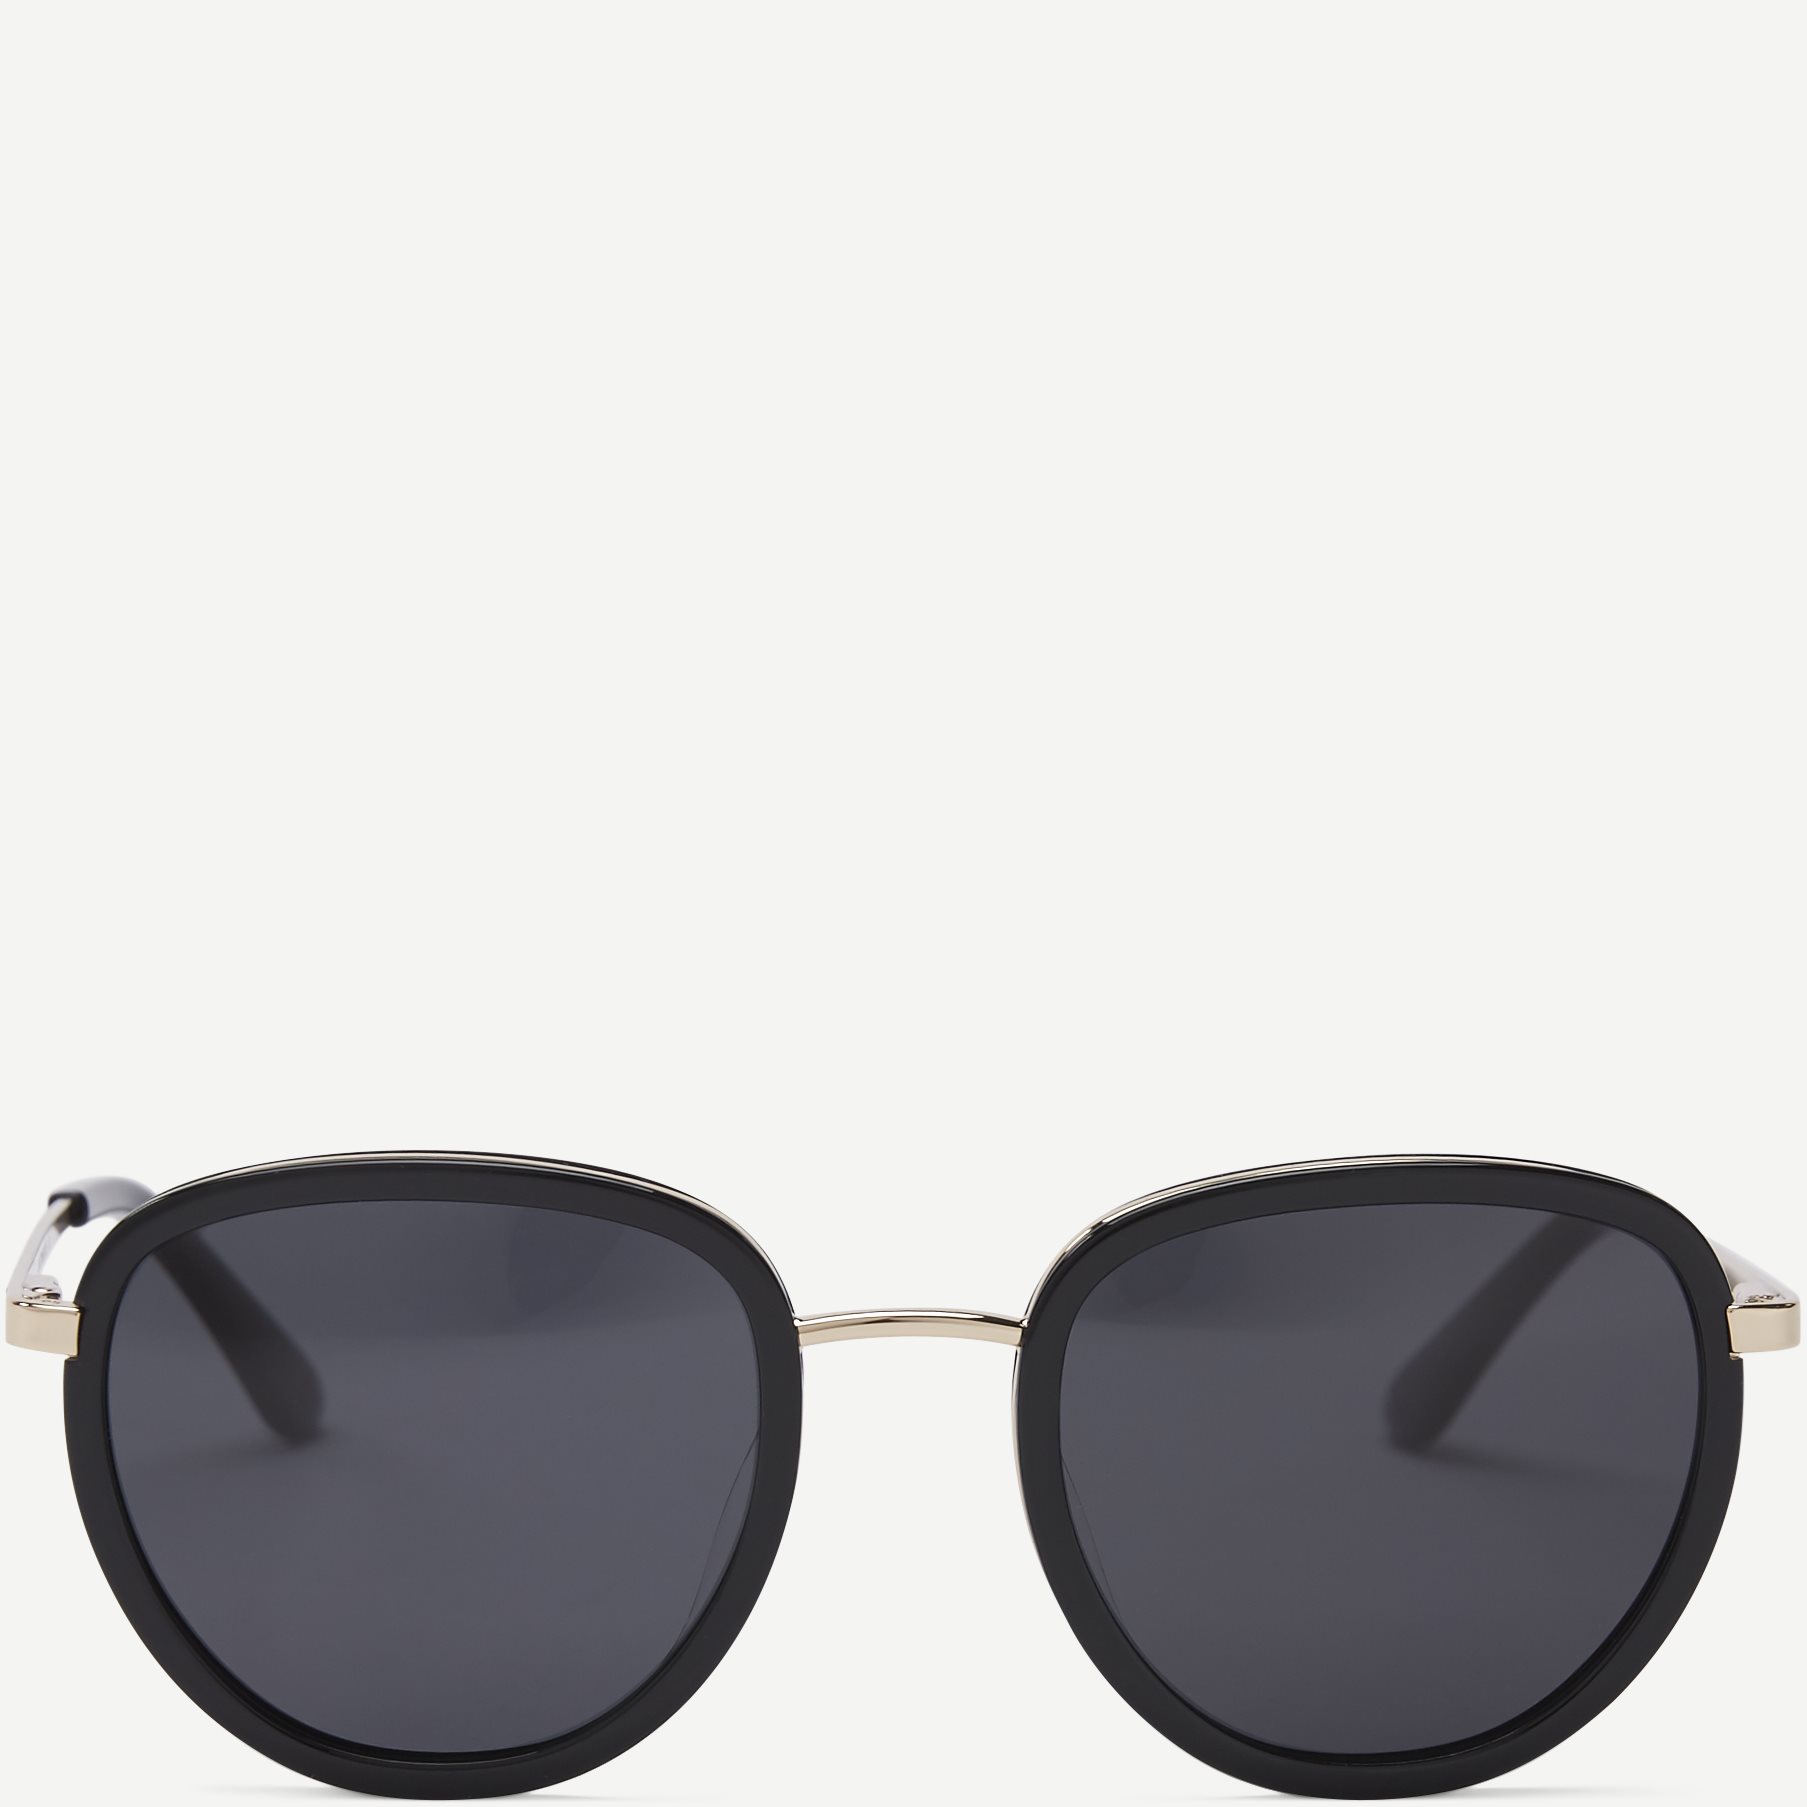 Governor Sunglasses - Accessories - Black